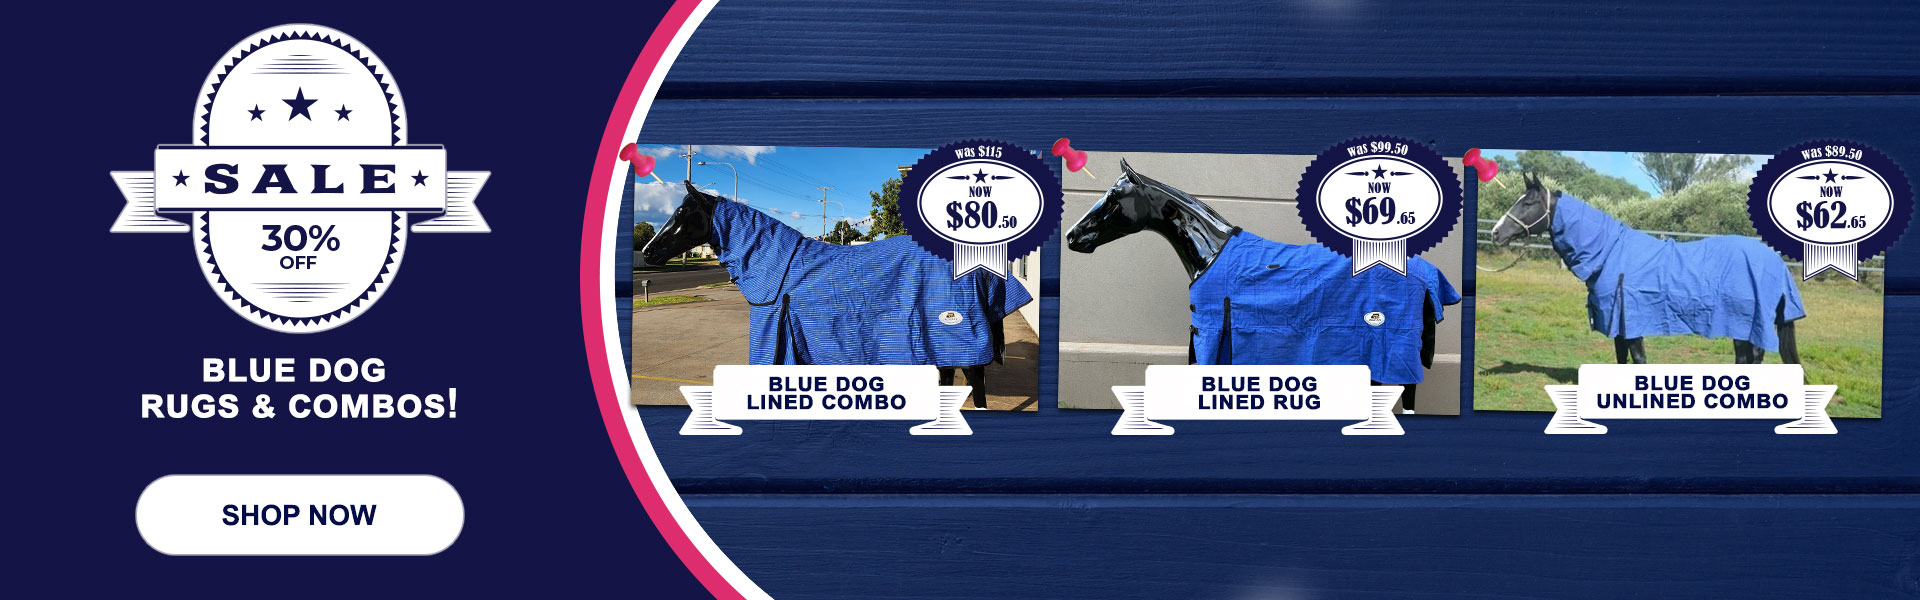 Blue Dog Sale